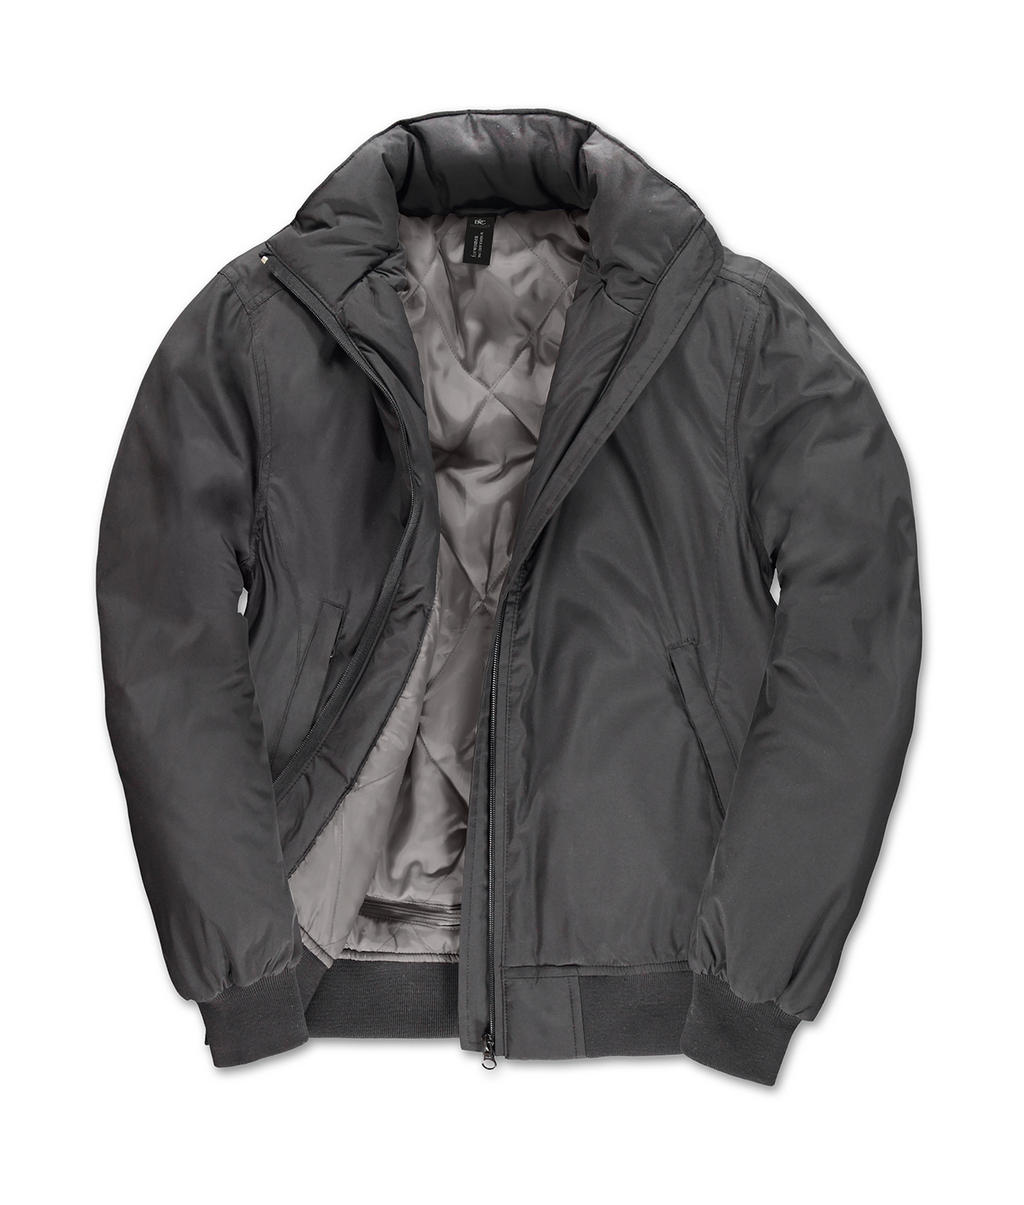  Crew Bomber/women Jacket in Farbe Dark Grey/Warm Grey